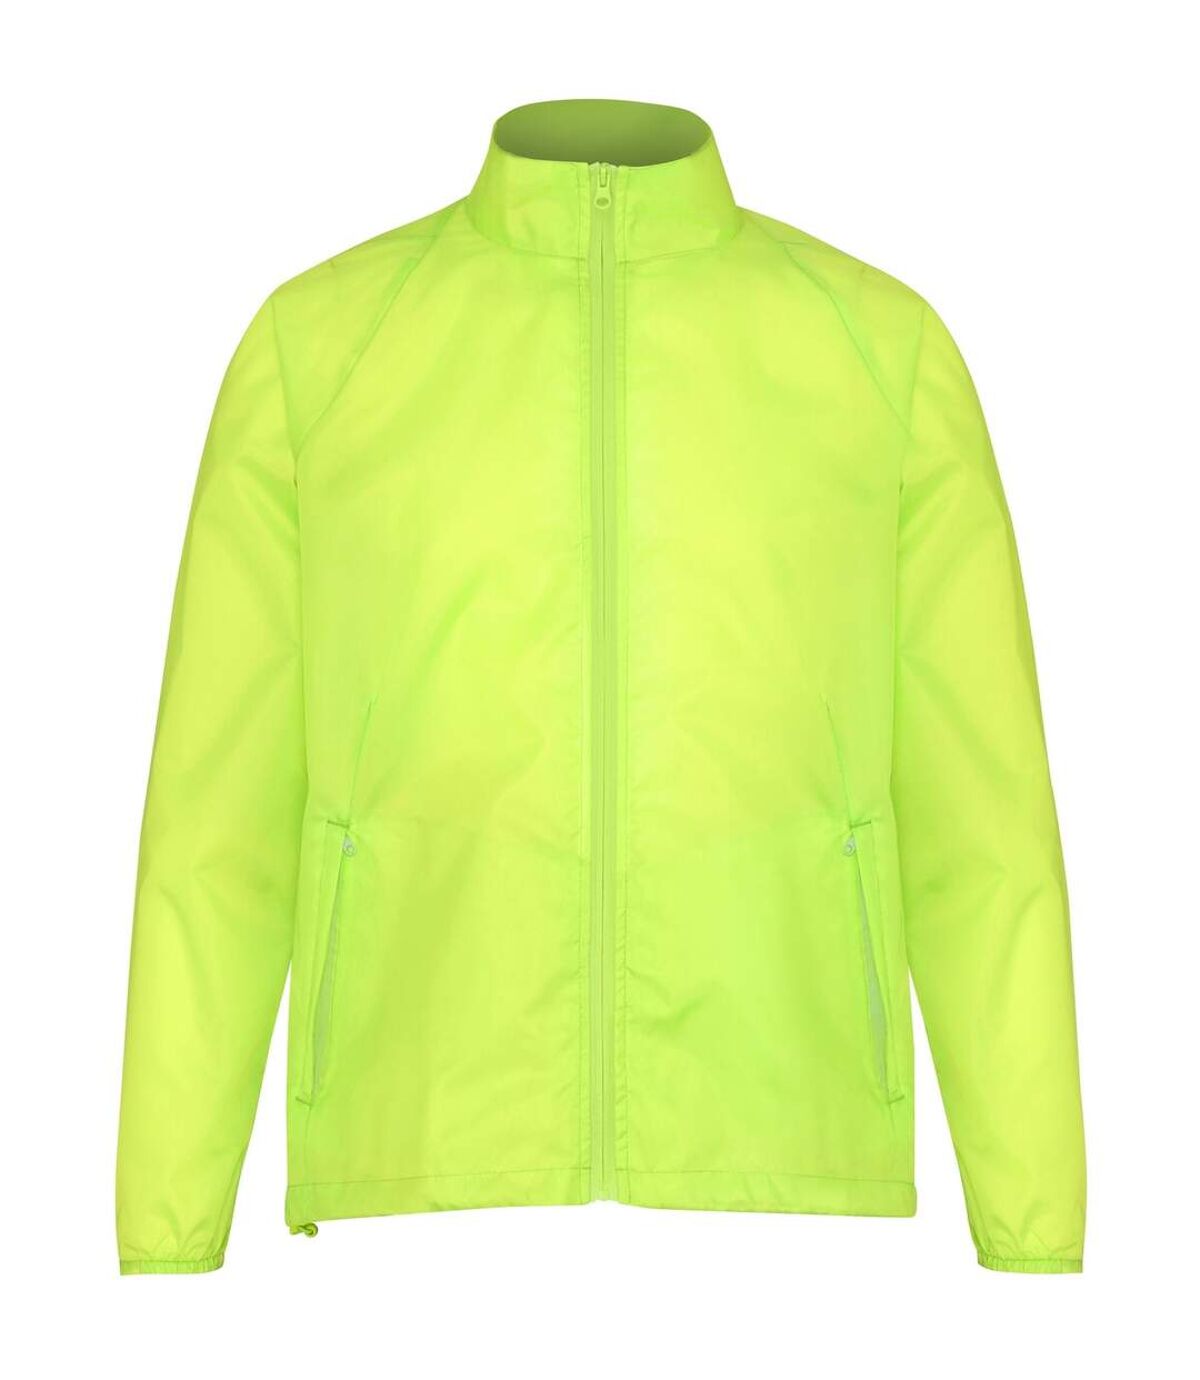 2786 Unisex Lightweight Plain Wind & Shower Resistant Jacket (Yellow) - UTRW2500